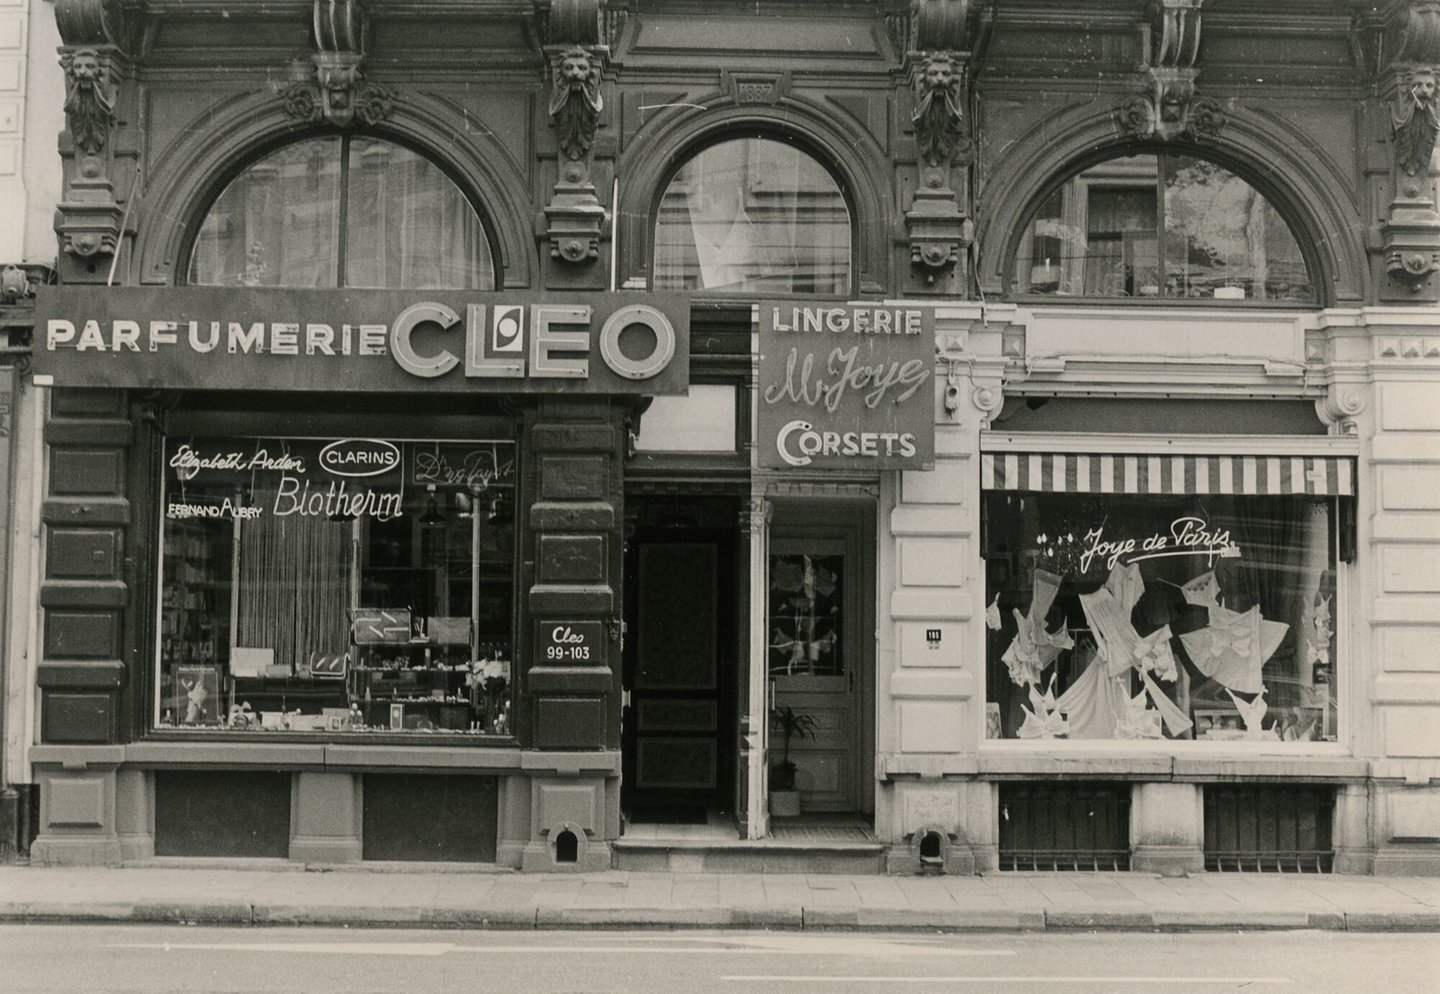 Etalages van parfumerie Cleo en lingeriewinkel M. Joye in Gent